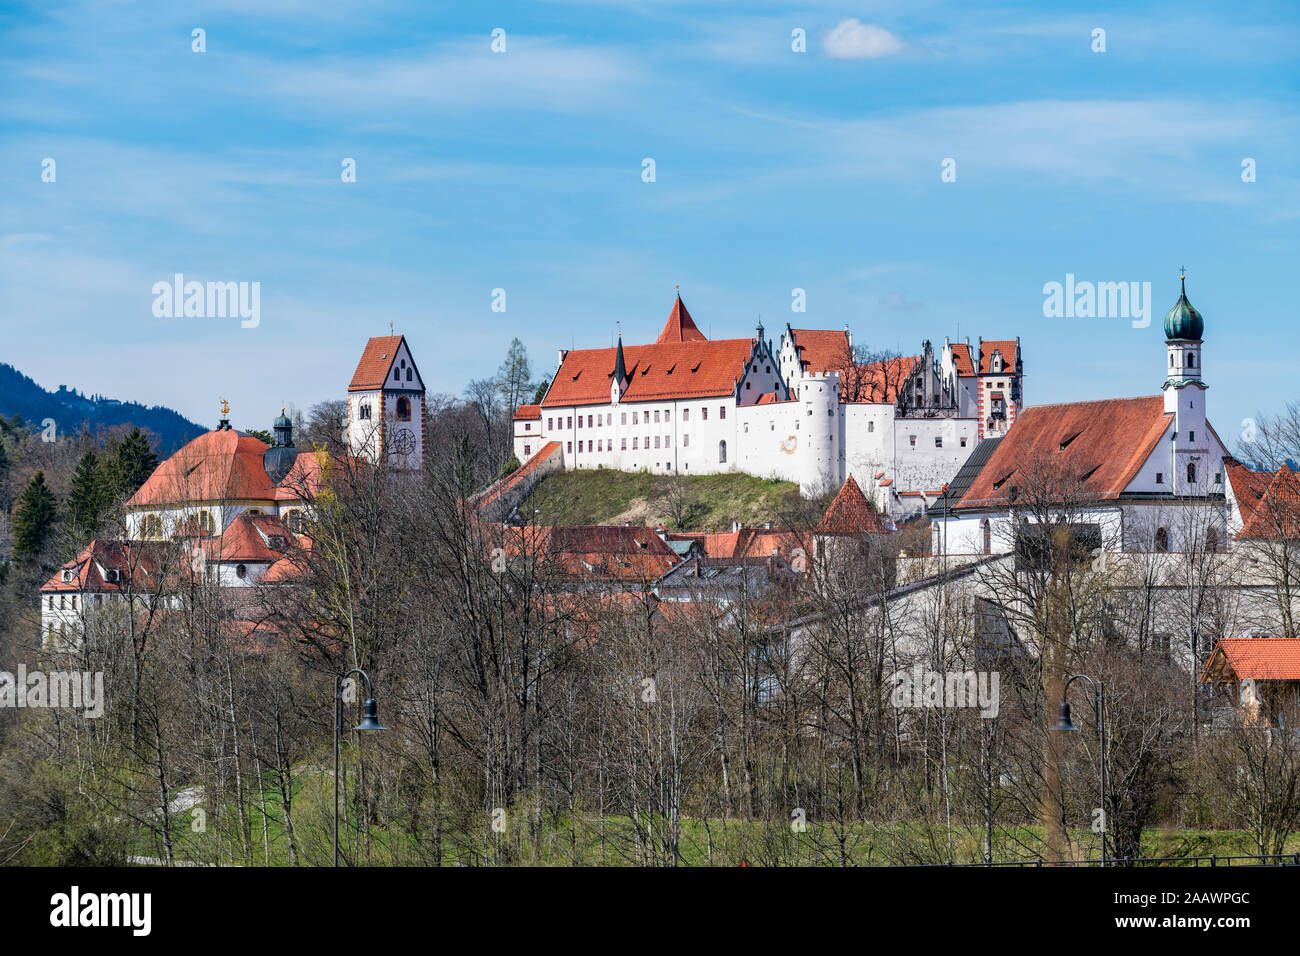 Germany, Bavaria, Fussen, Saint Mangs Abbey seen through trees Stock Photo